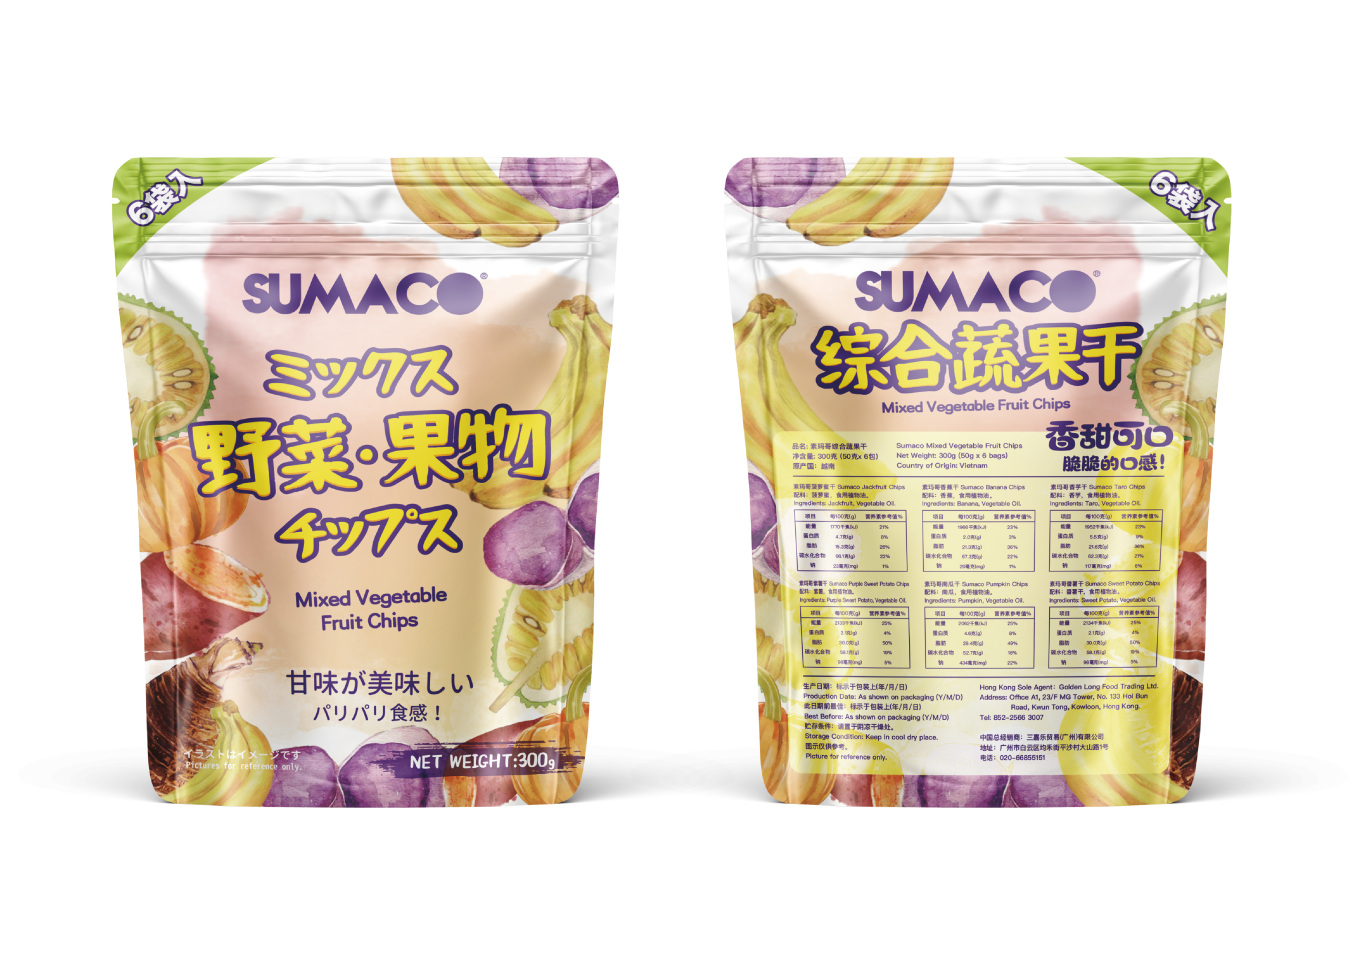 SUMACO素玛哥综合蔬果干零食产品包装设计图2